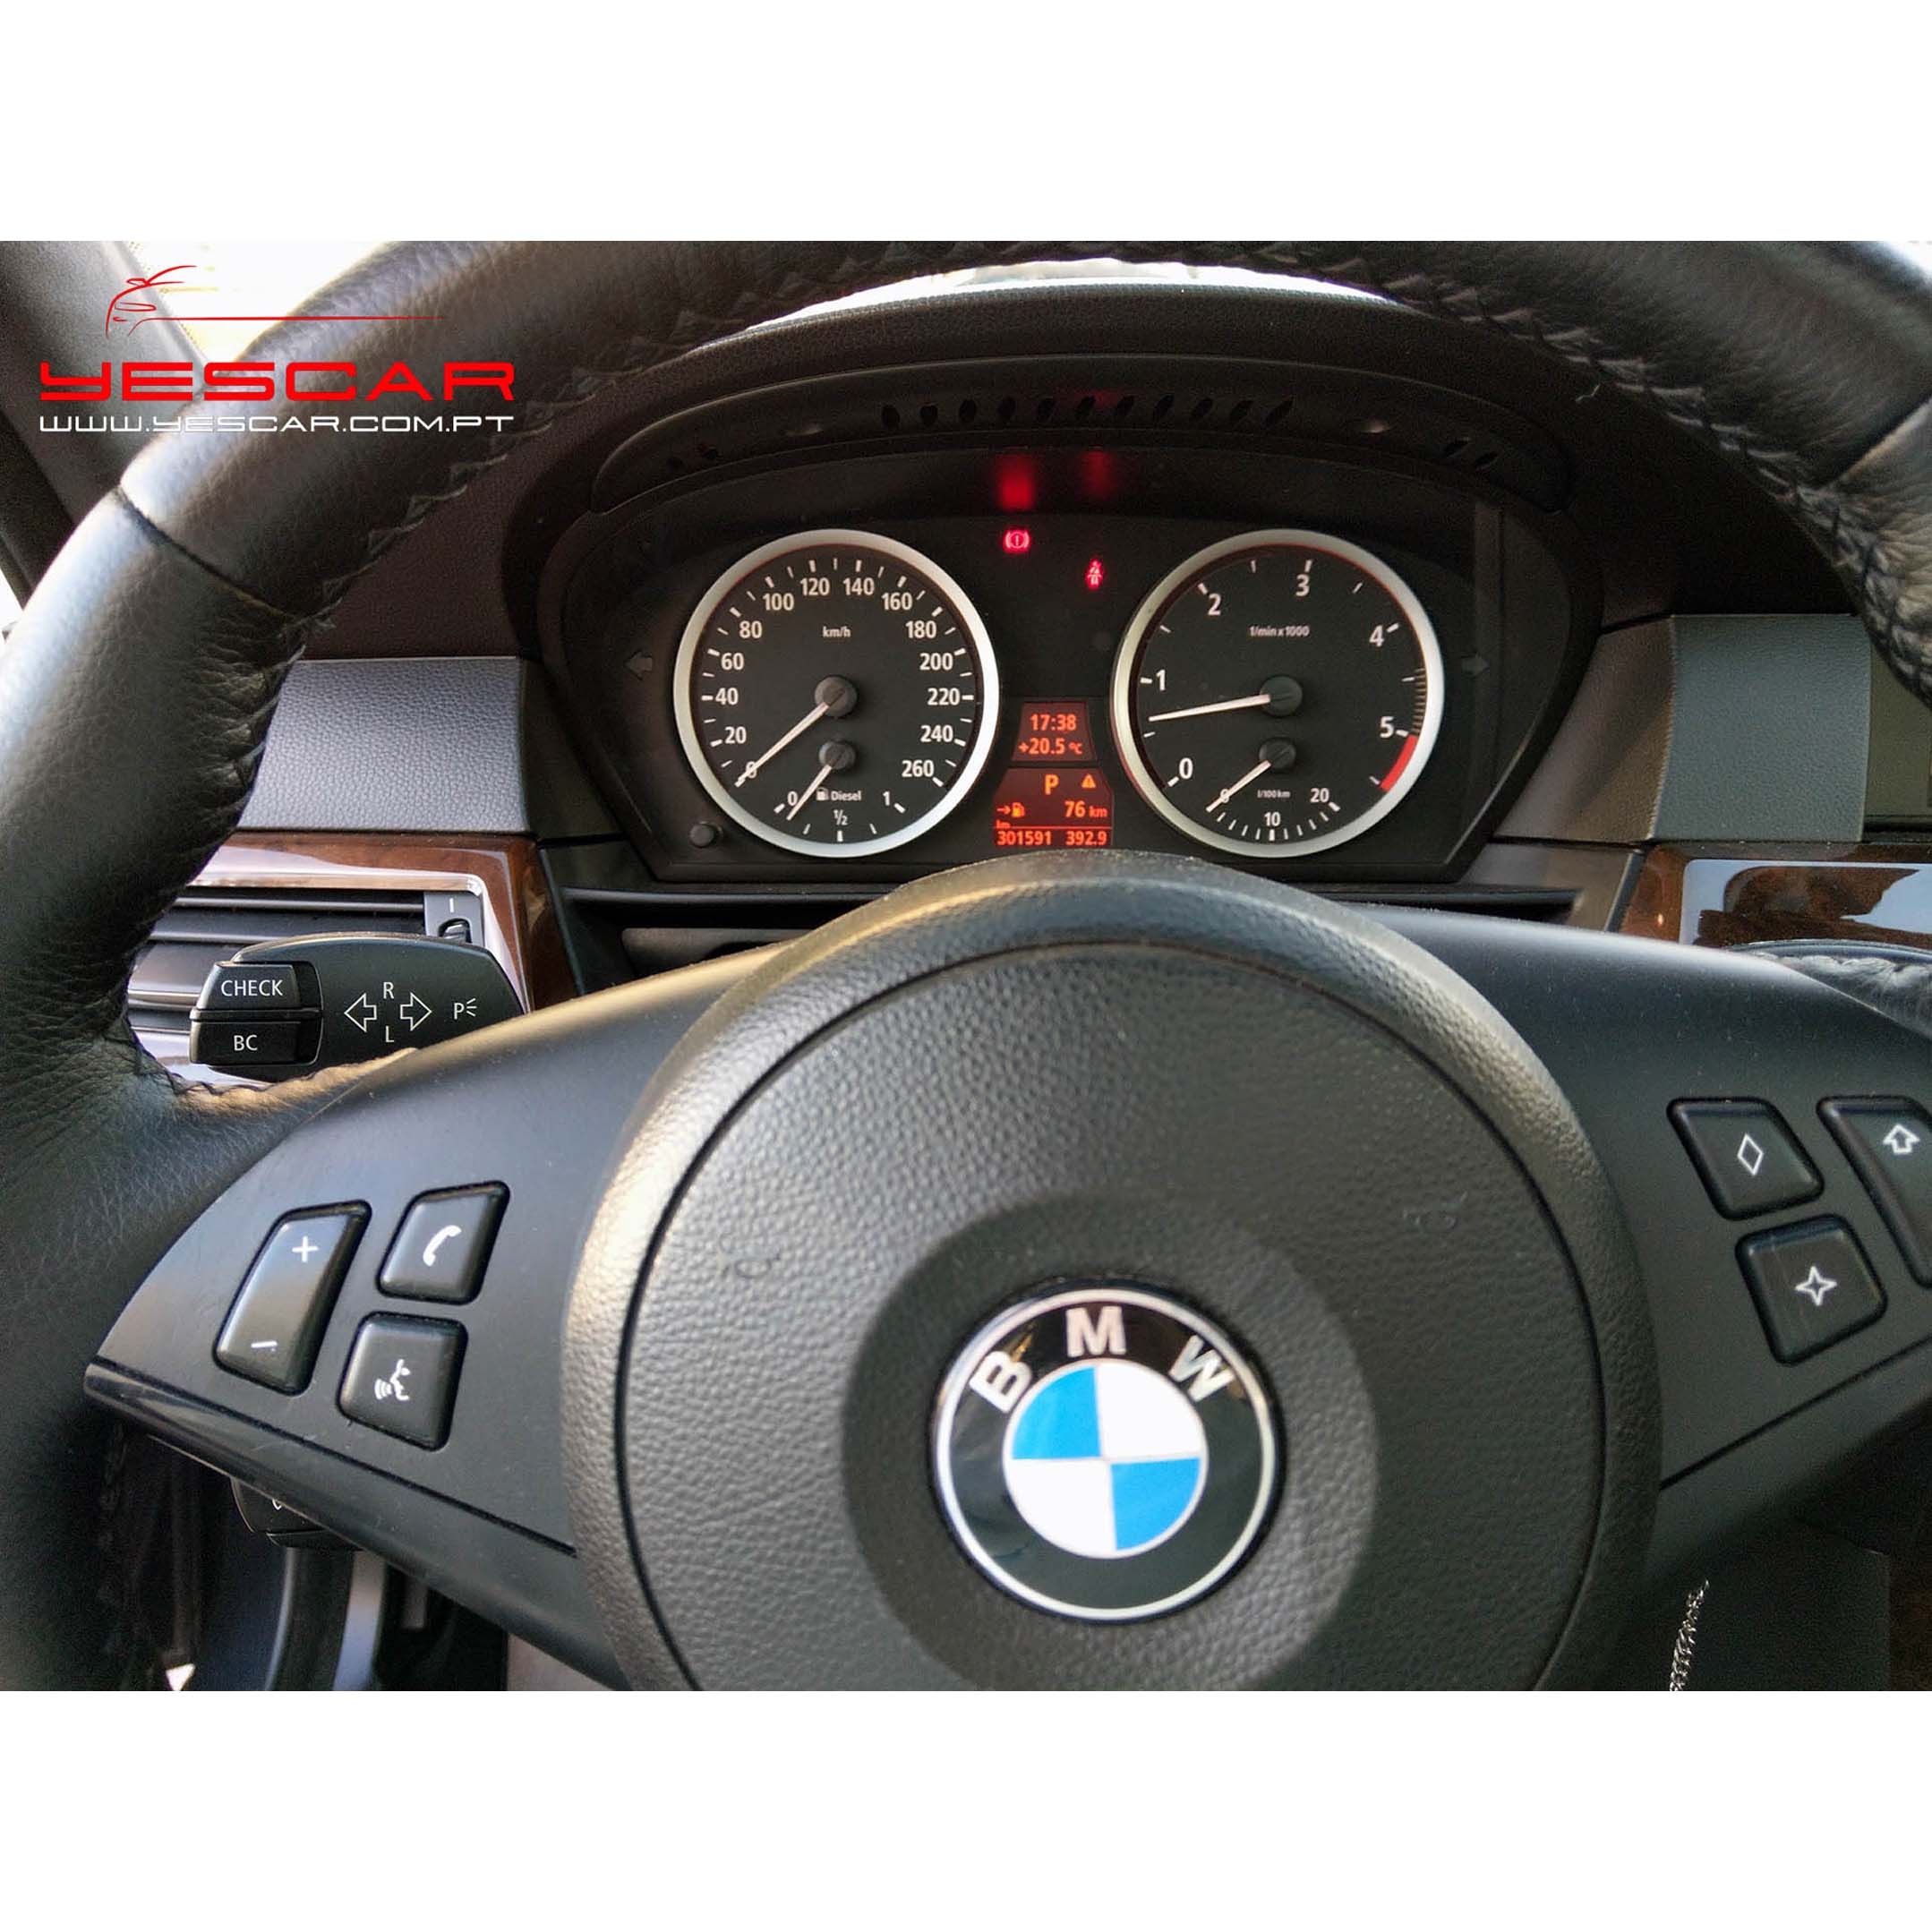 YESCAR_BMW_530_Tdi_Touring q (24)